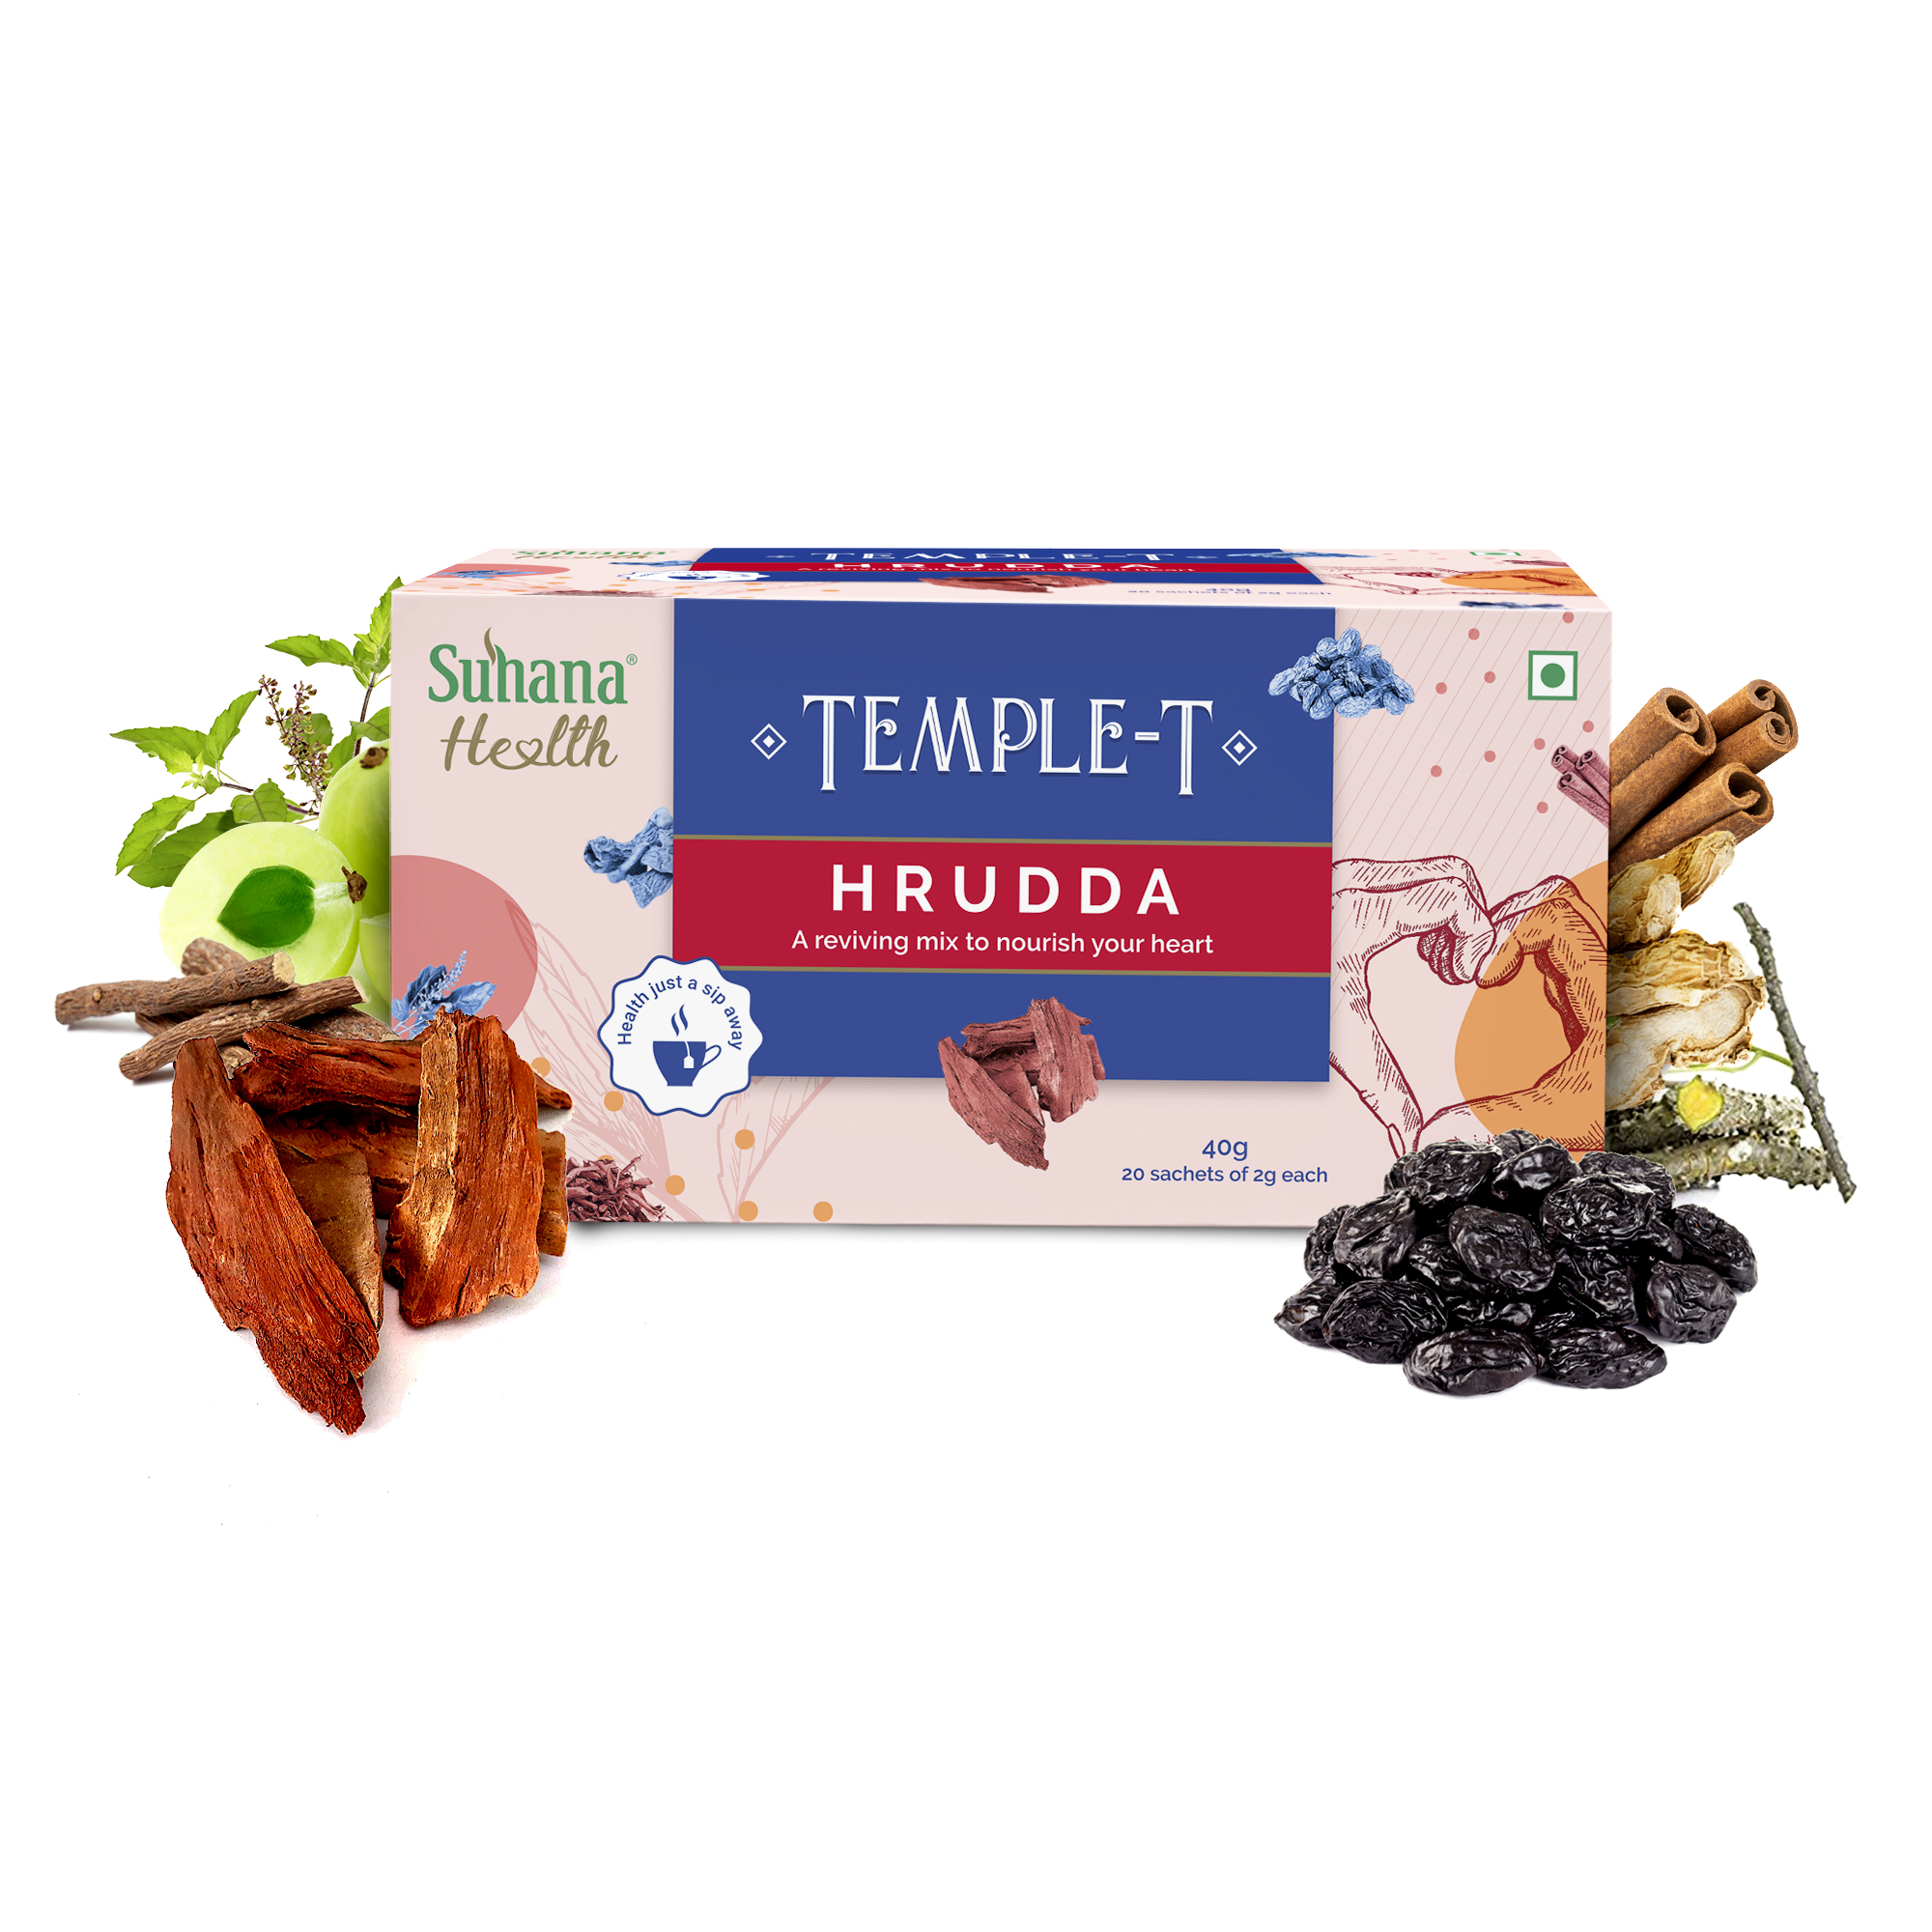 Suhana Health Hrudda Herbal Premix Temple T